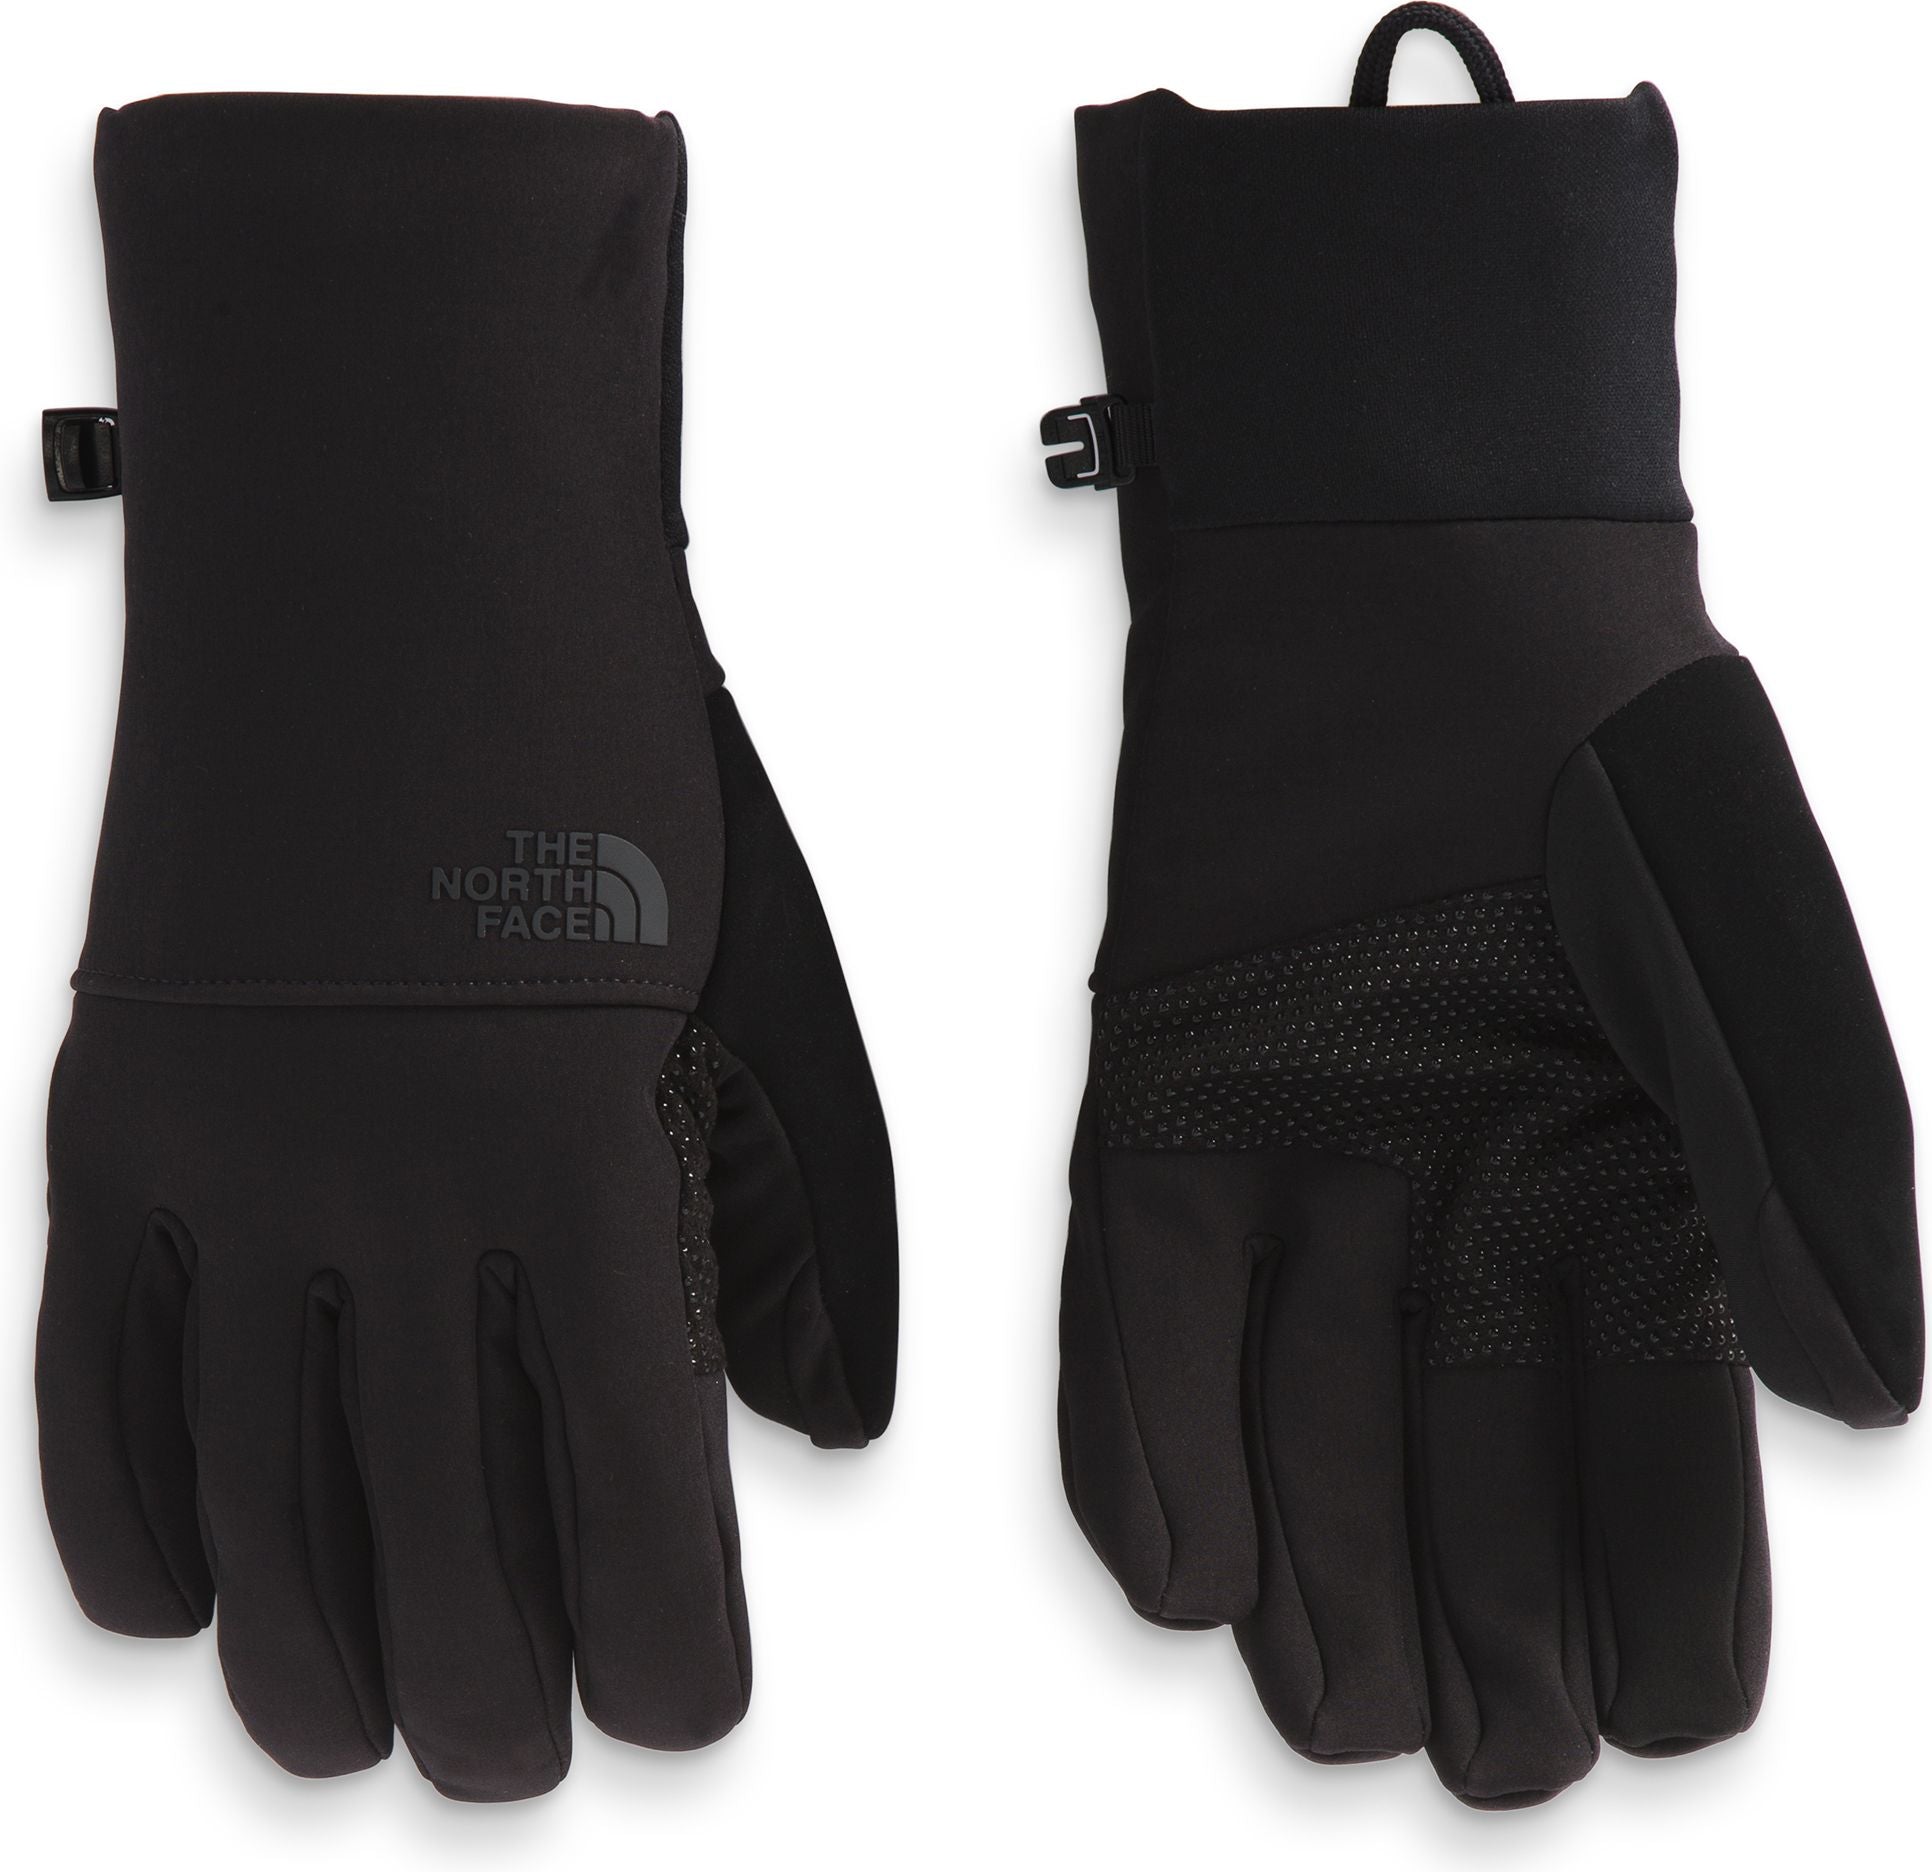 Apex Heated Glove Thf Black